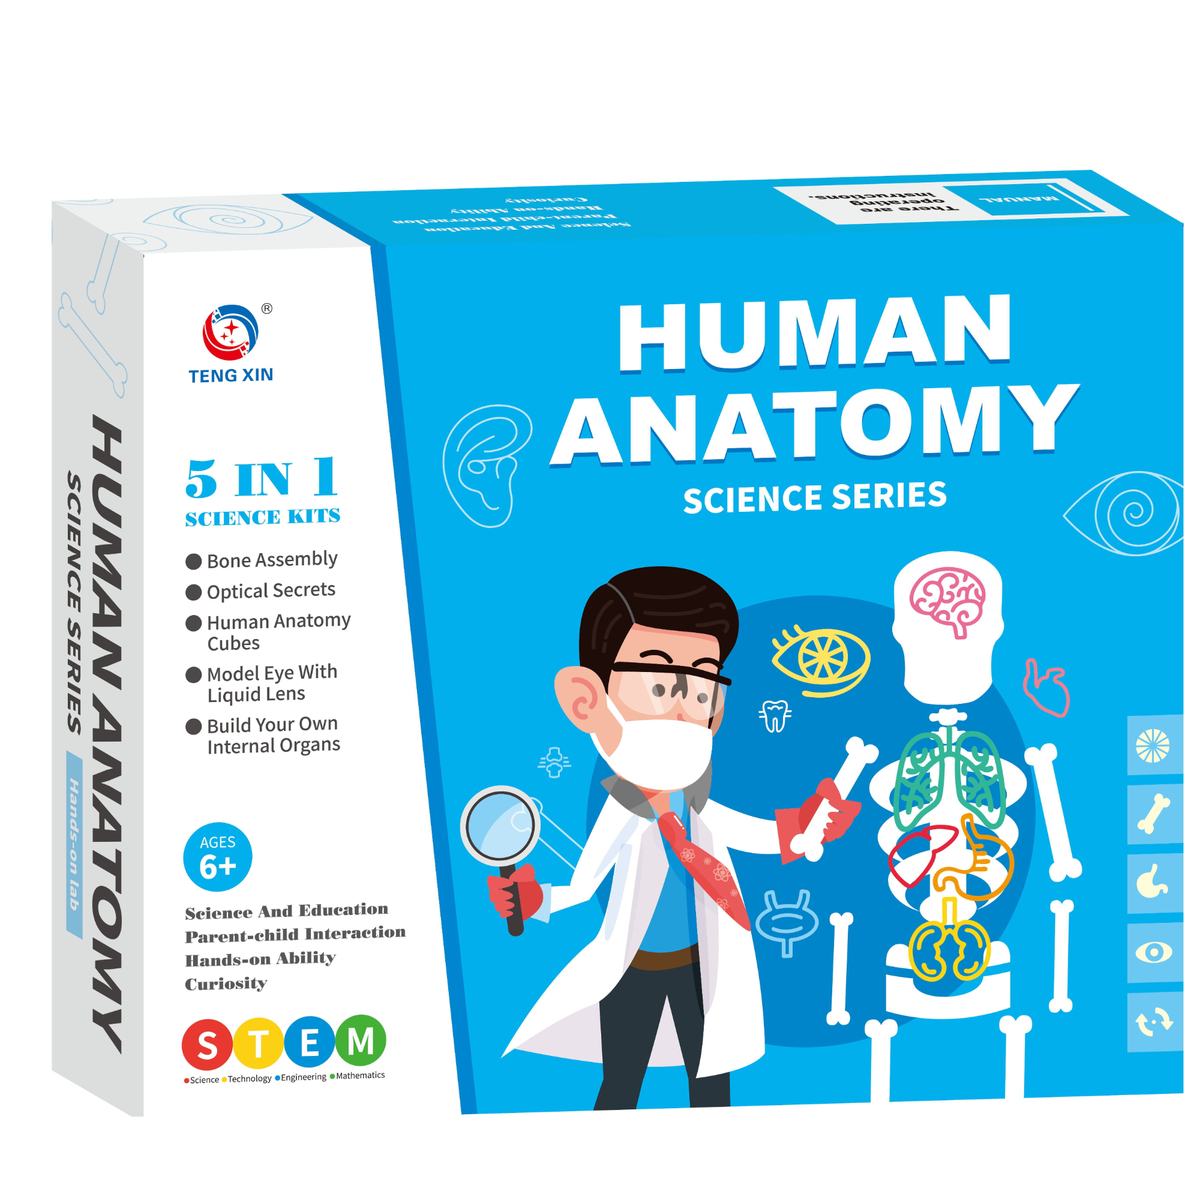 Teng Xin Human Anatomy Science Series, TXX-017